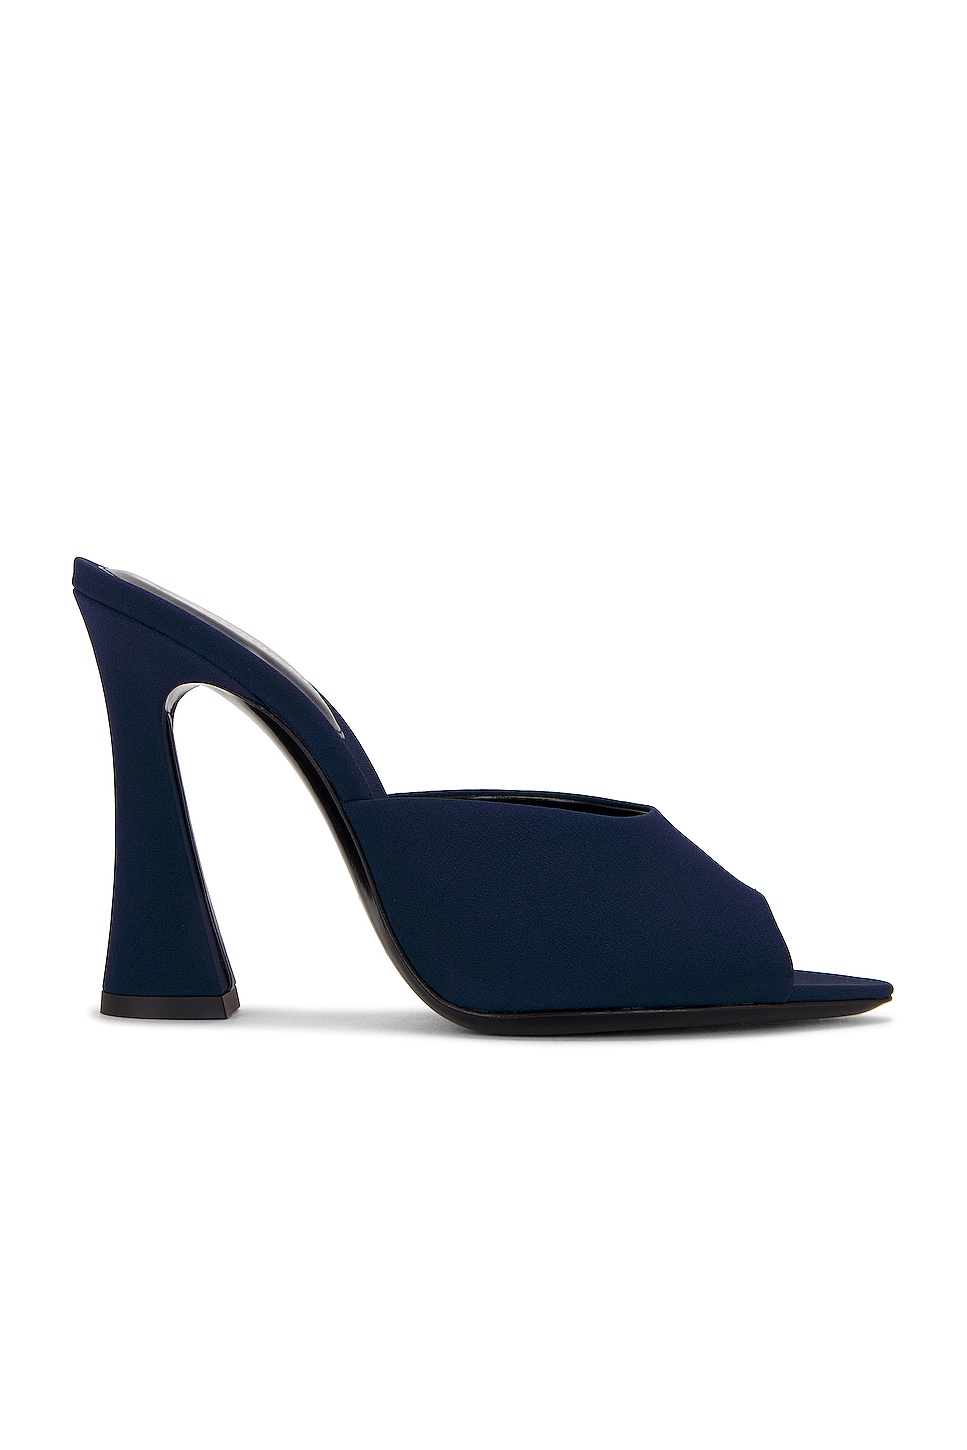 Image 1 of Saint Laurent Suite Mule Sandal in Dark Blue